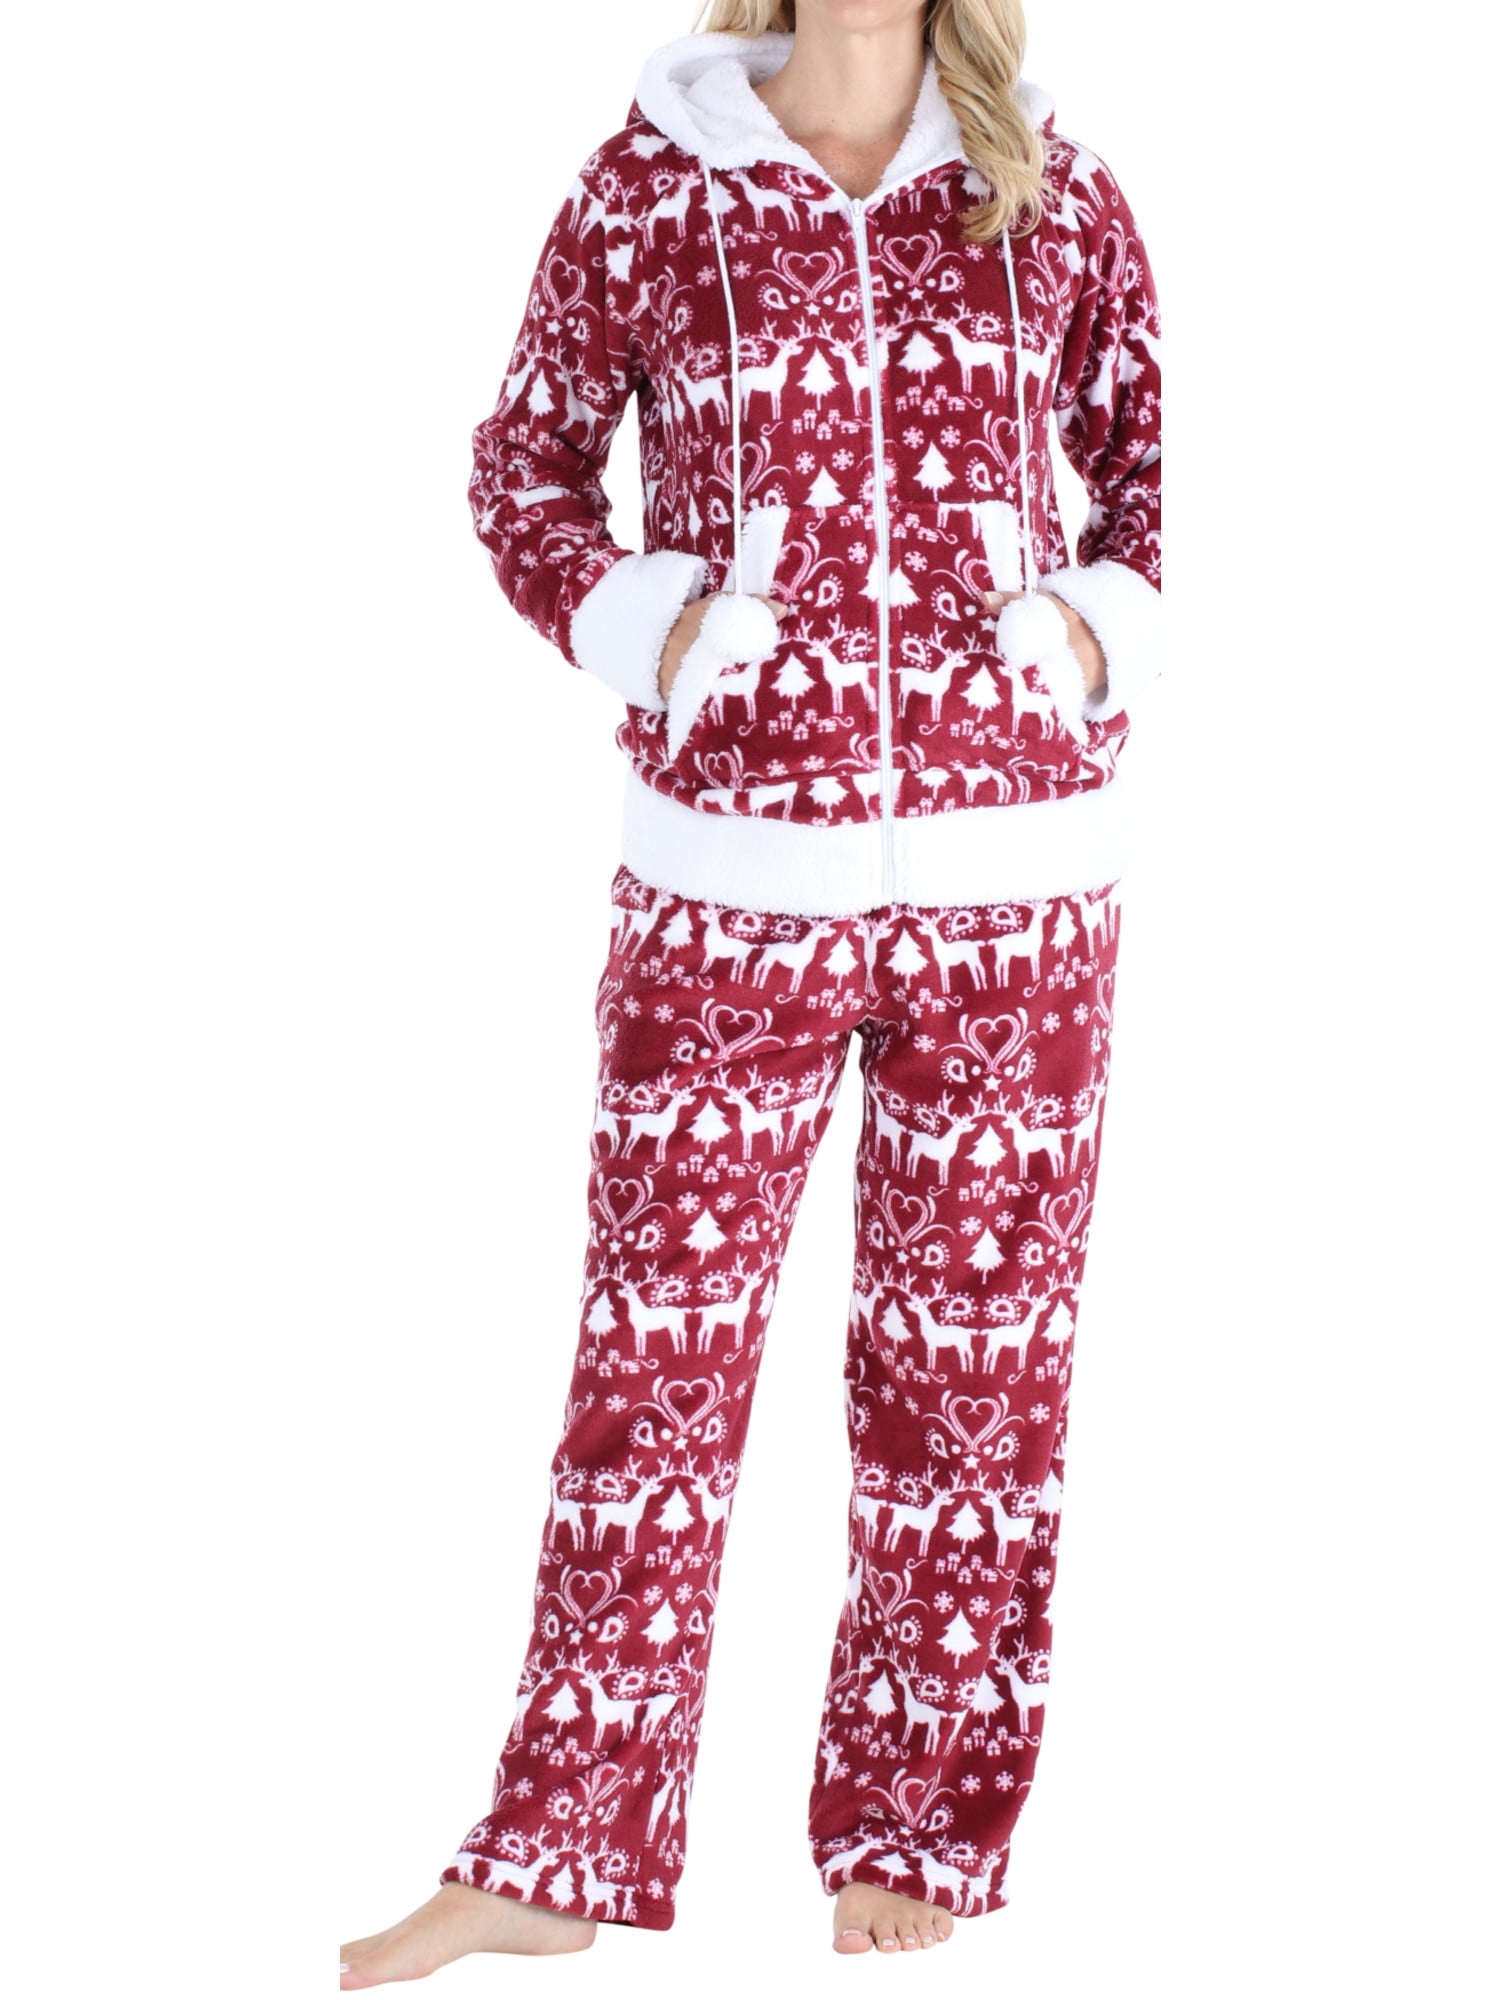 Cocoom Stretch Microfleece Pajama Pant Set for Women with Sherpa Trim